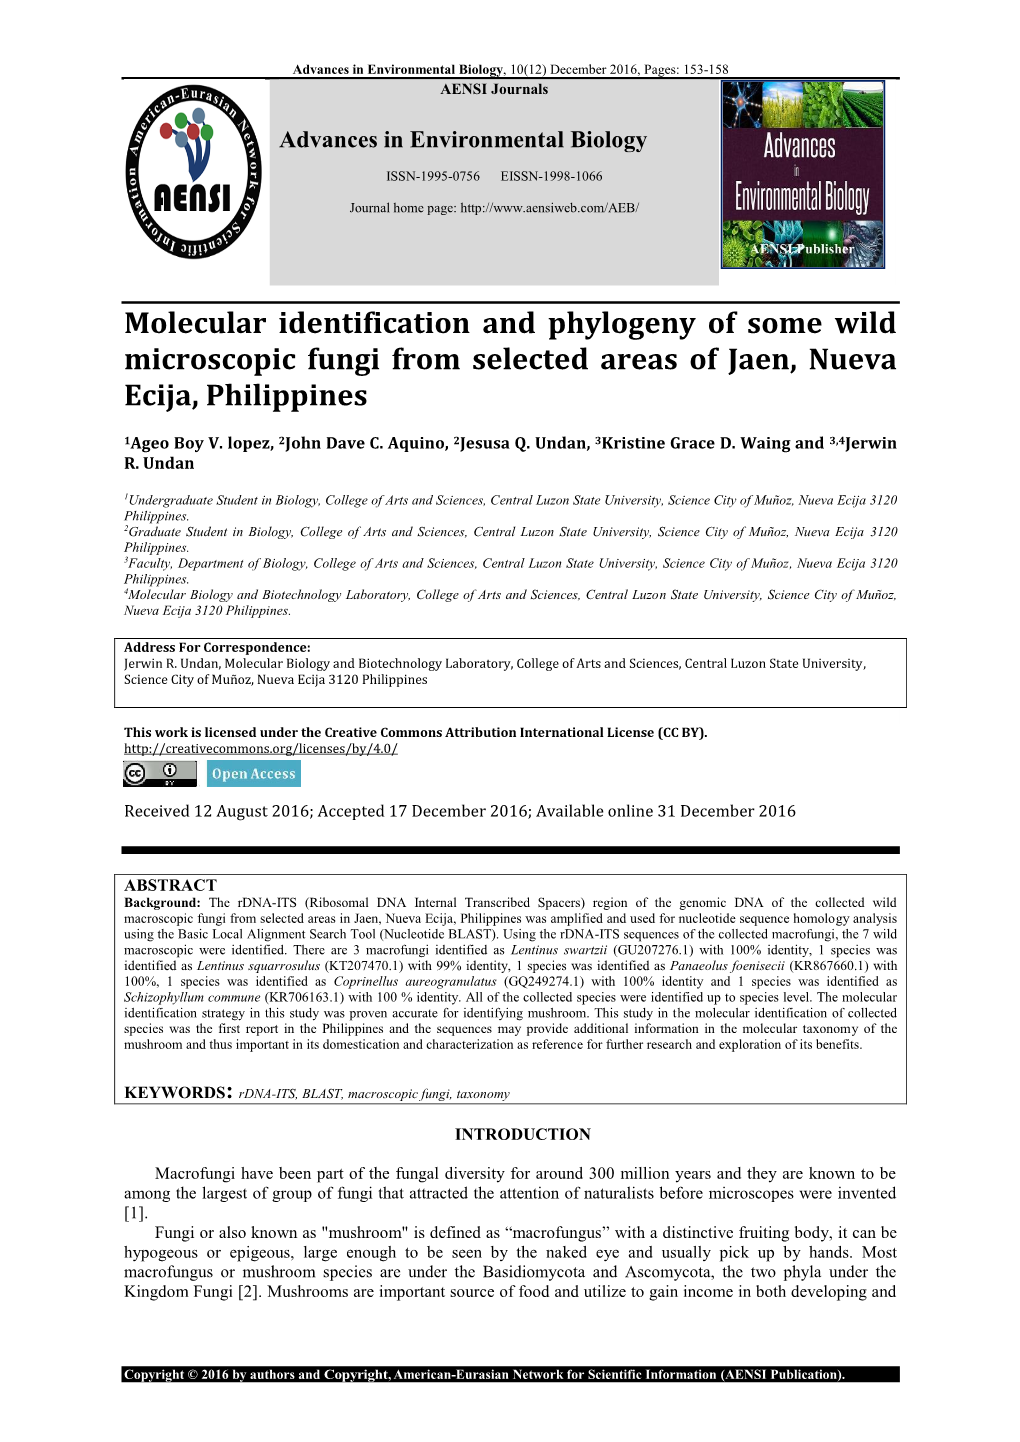 Molecular Identification and Phylogeny of Some Wild Microscopic Fungi from Selected Areas of Jaen, Nueva Ecija, Philippines